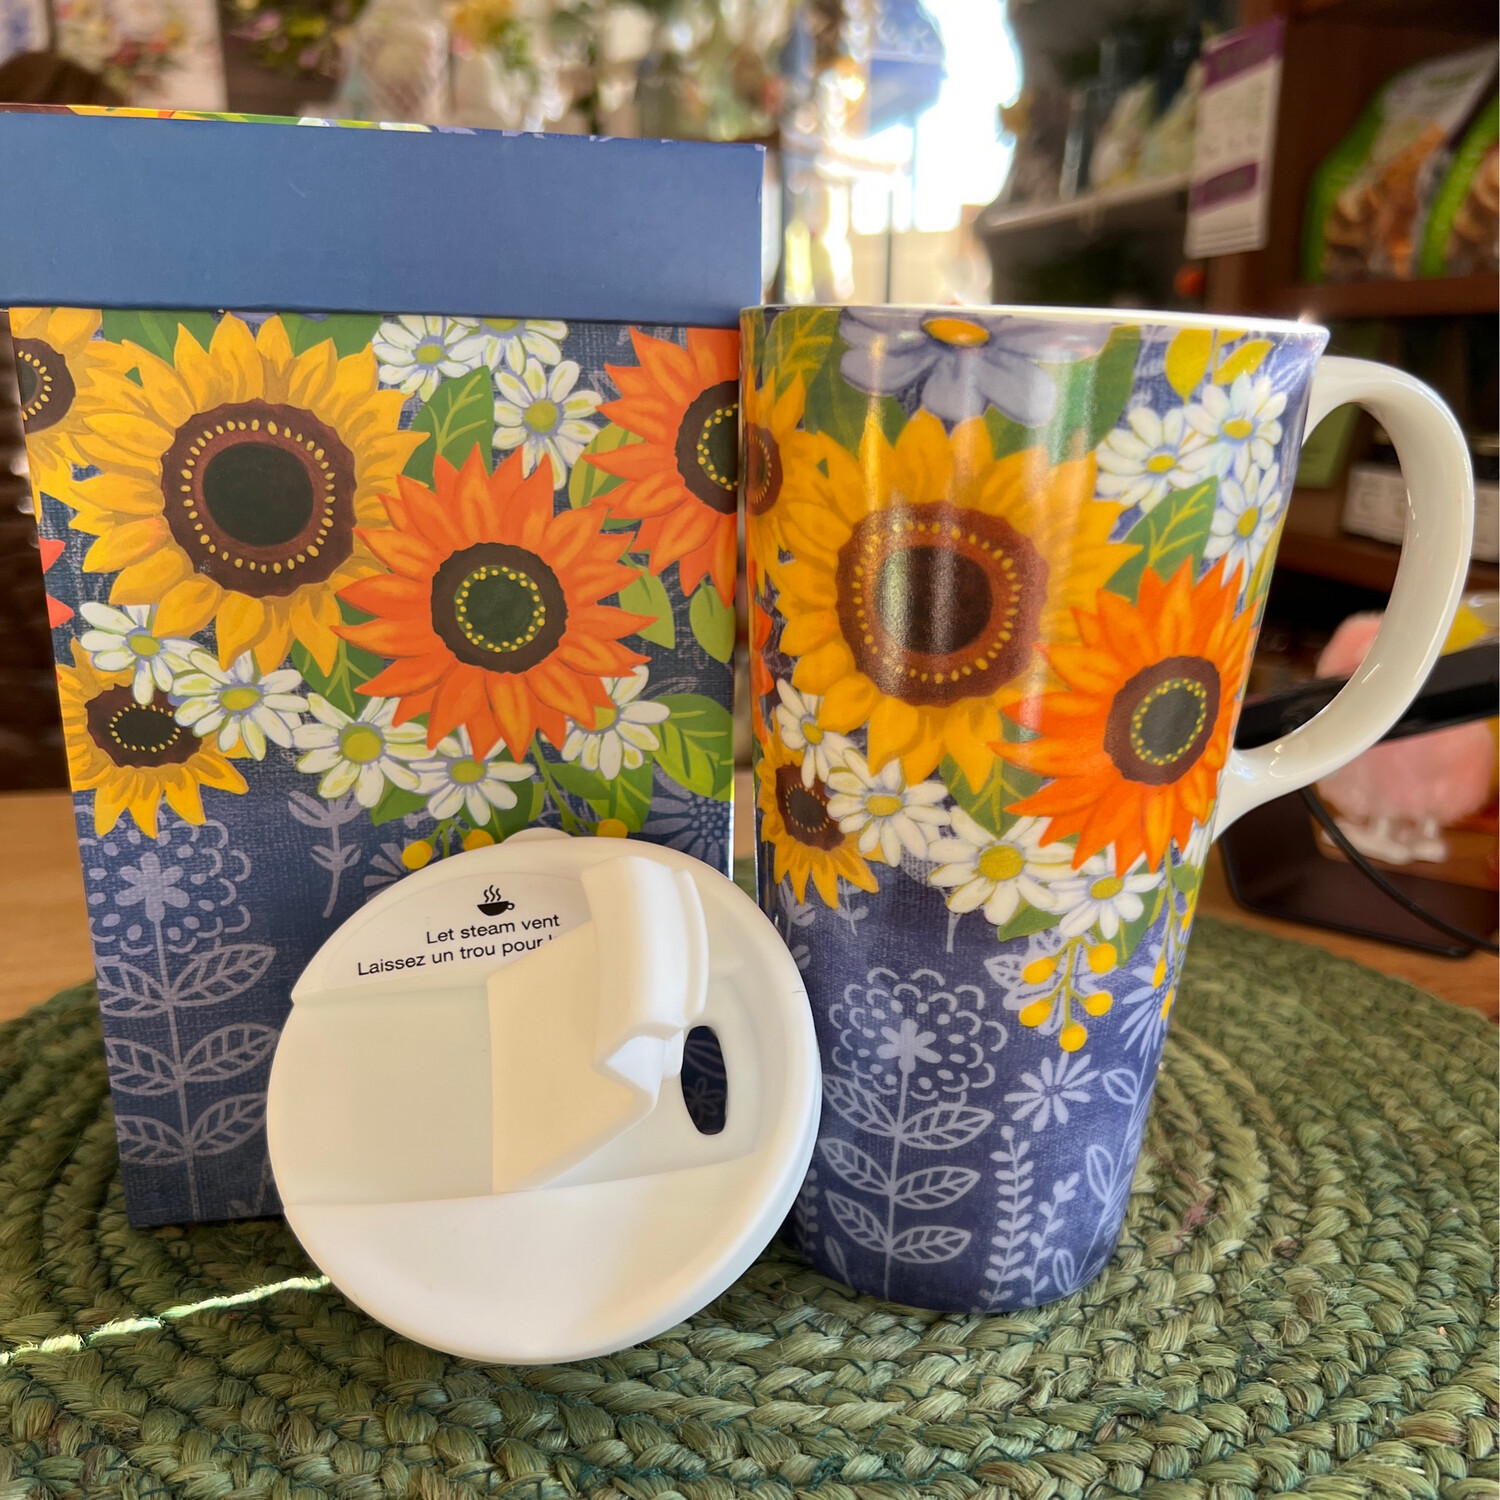 Sunflowers Travel Mug